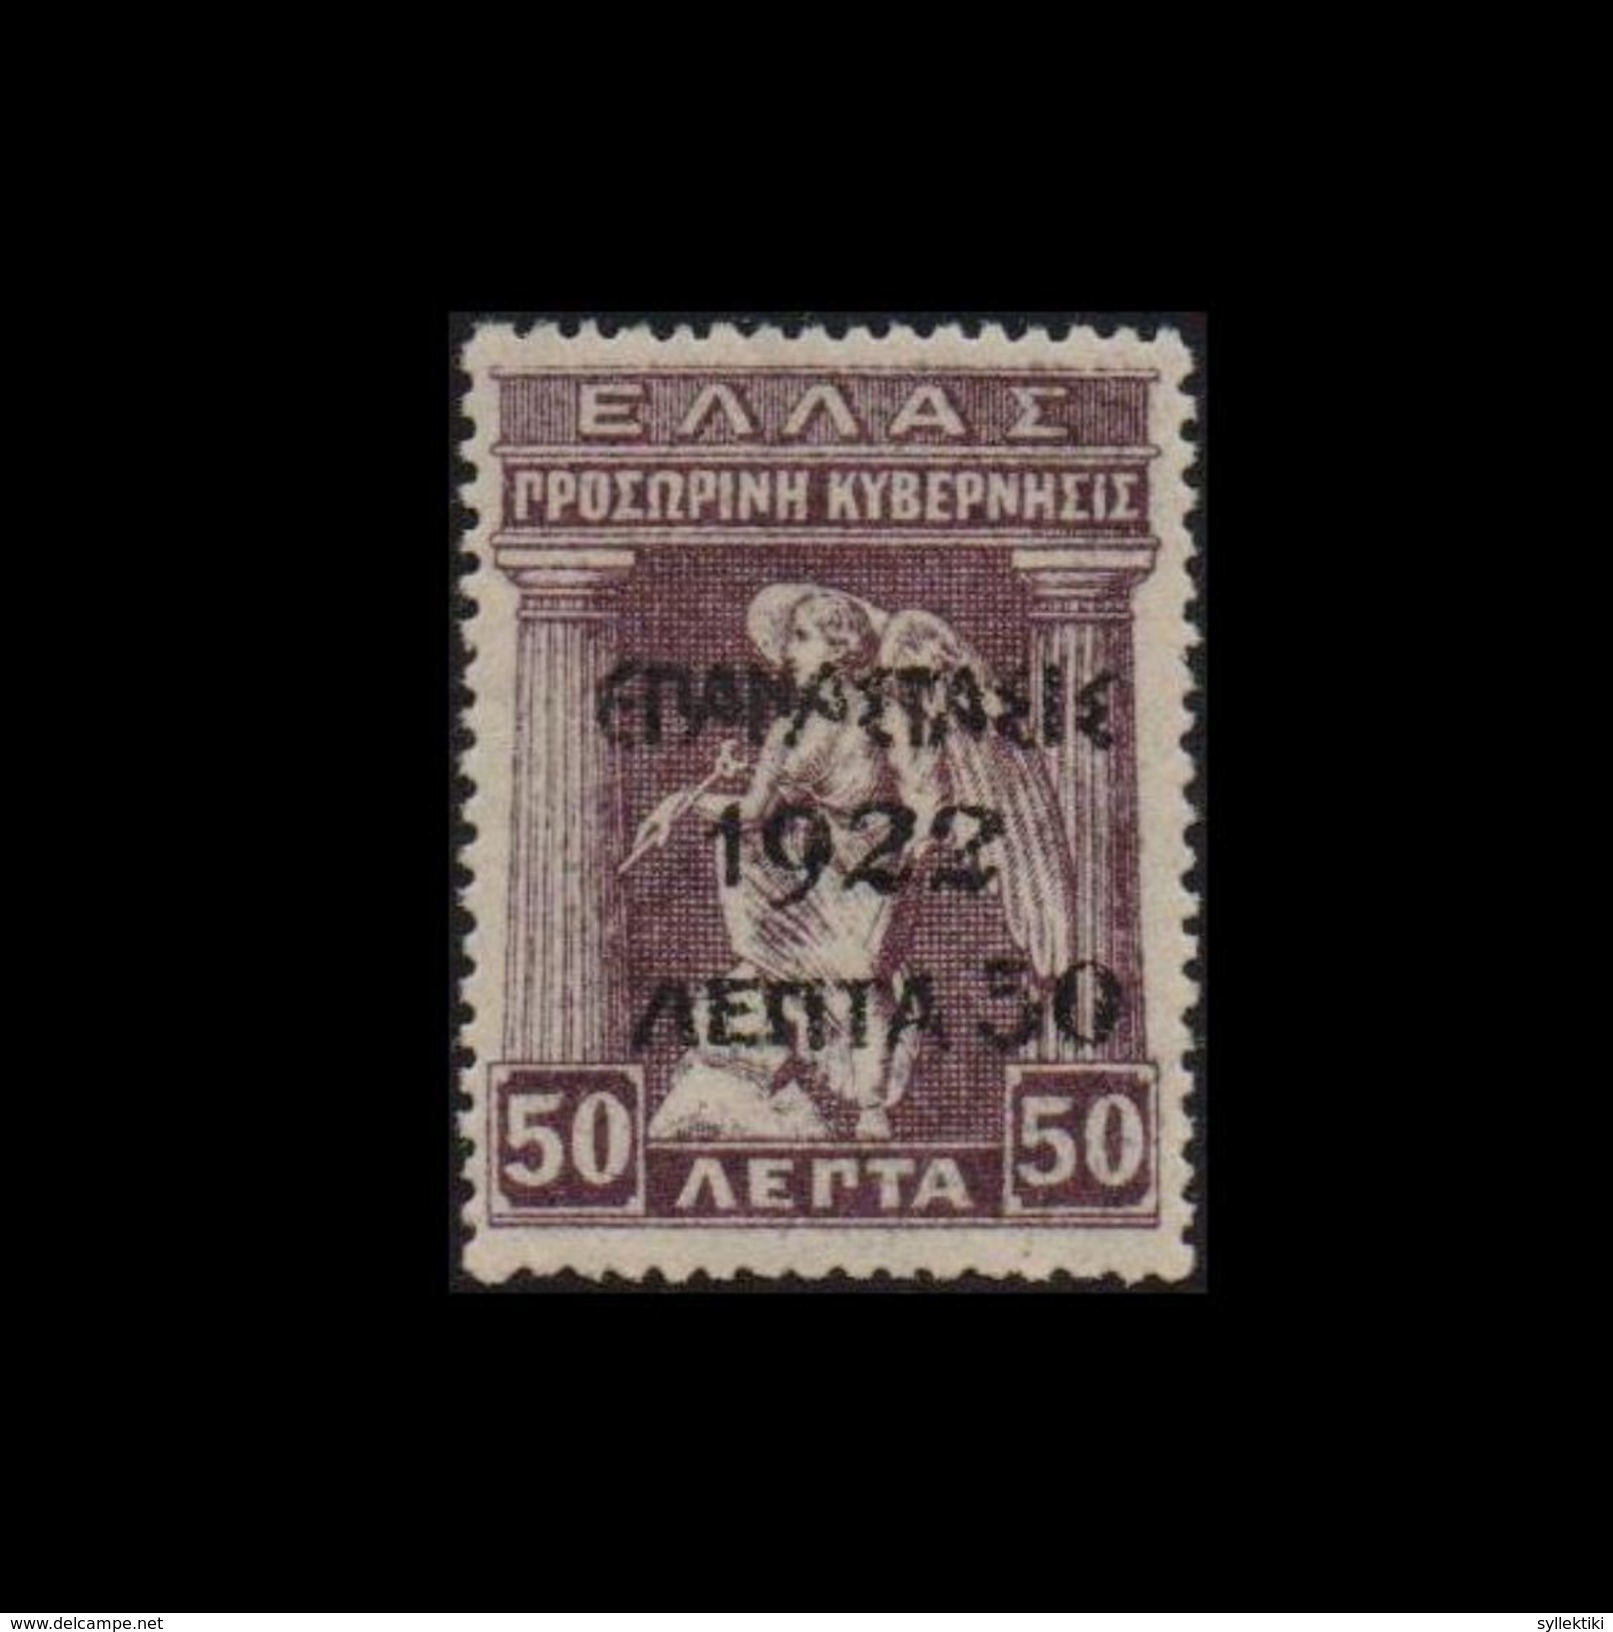 GREECE 1923 REVOLUTION VENIZELOS 50L/50L MH STAMP WITH MIRROR PRINT - Neufs